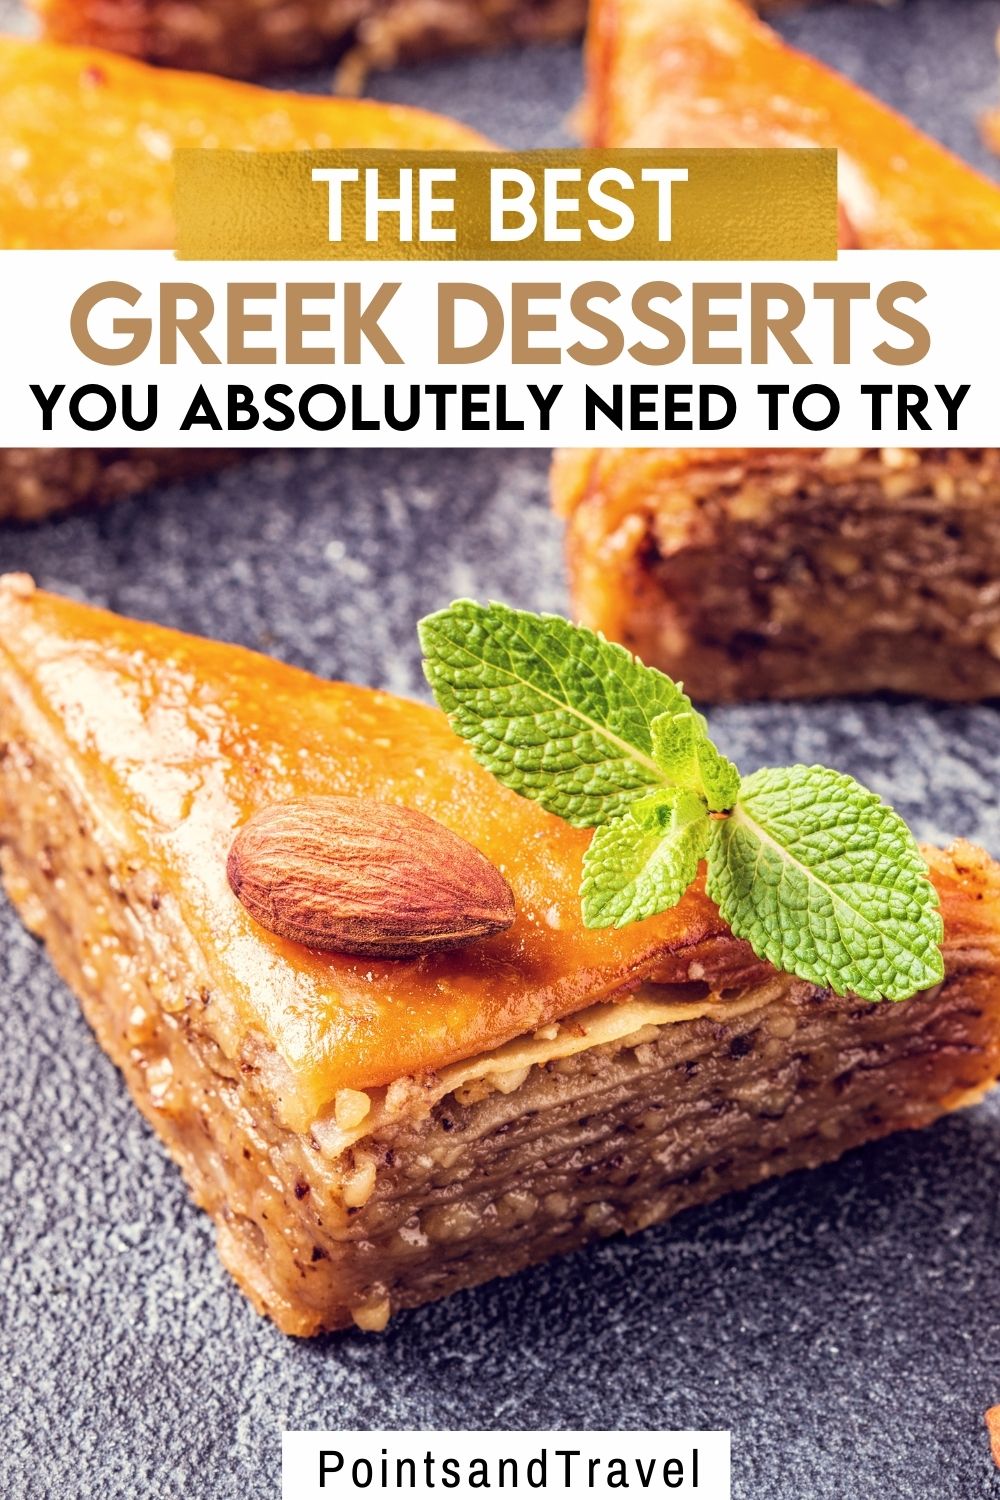 Greek desserts, desserts from Greece, Greece desserts, kataif, Greek pastry, Greek pastries